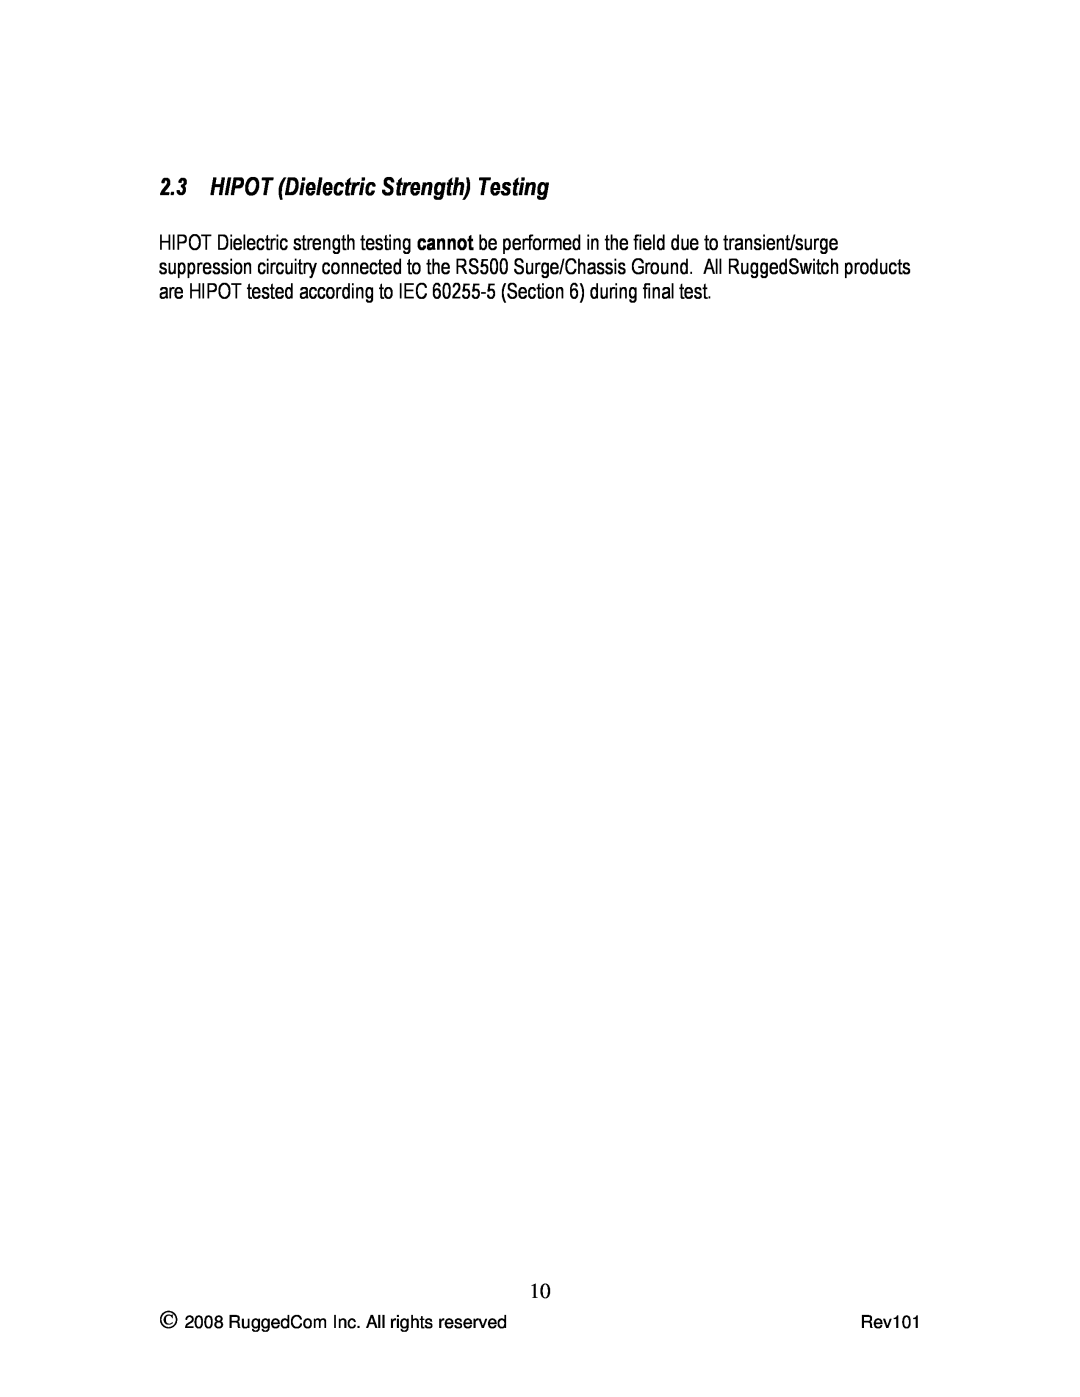 RuggedCom RS500 manual HIPOT Dielectric Strength Testing,  2008 RuggedCom Inc. All rights reserved, Rev101 